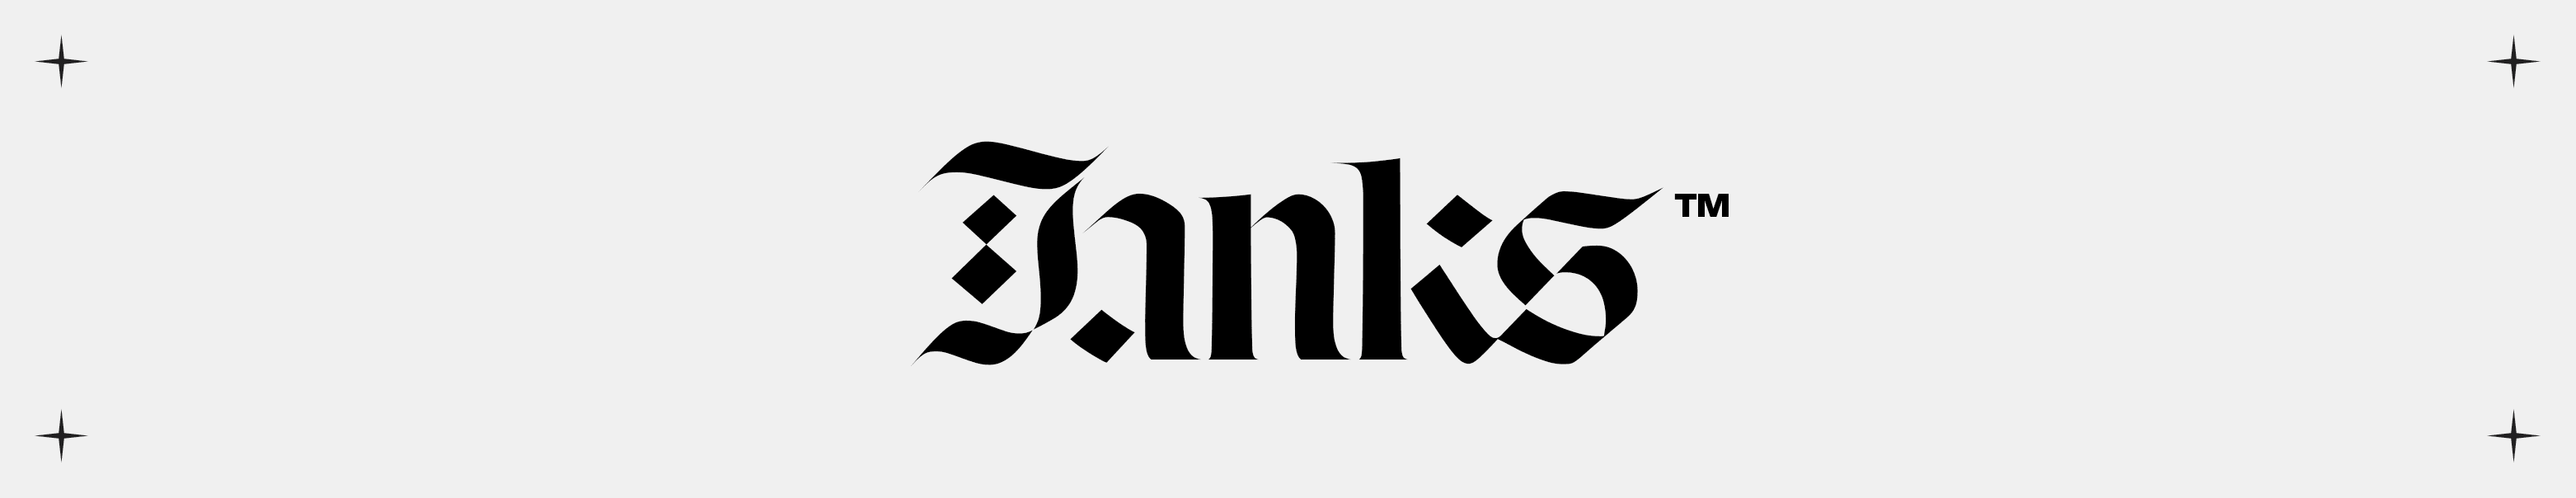 Janks_ banner